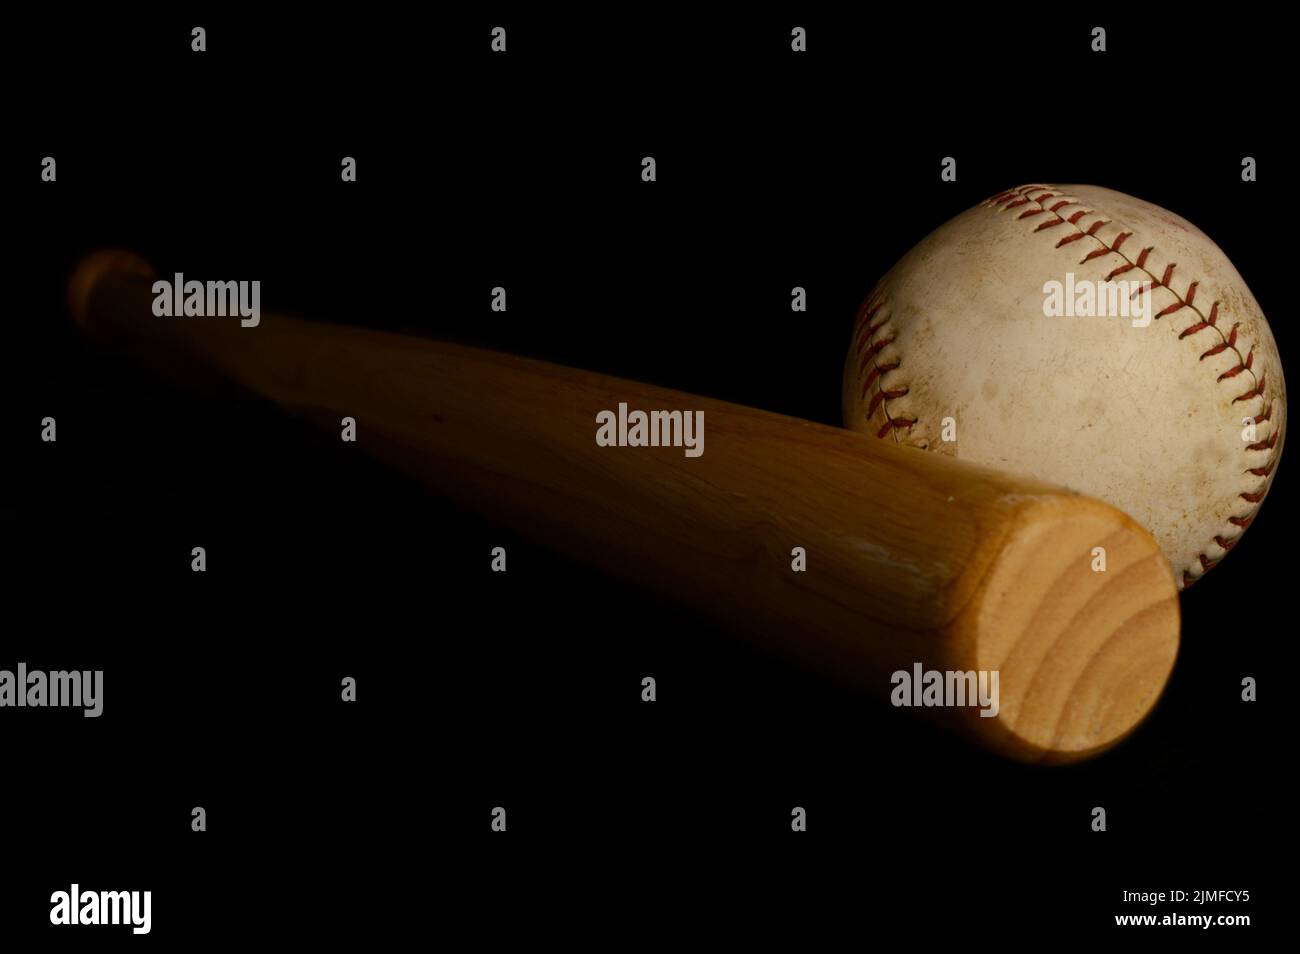 Isolated Bat and Baseball Stock Photo